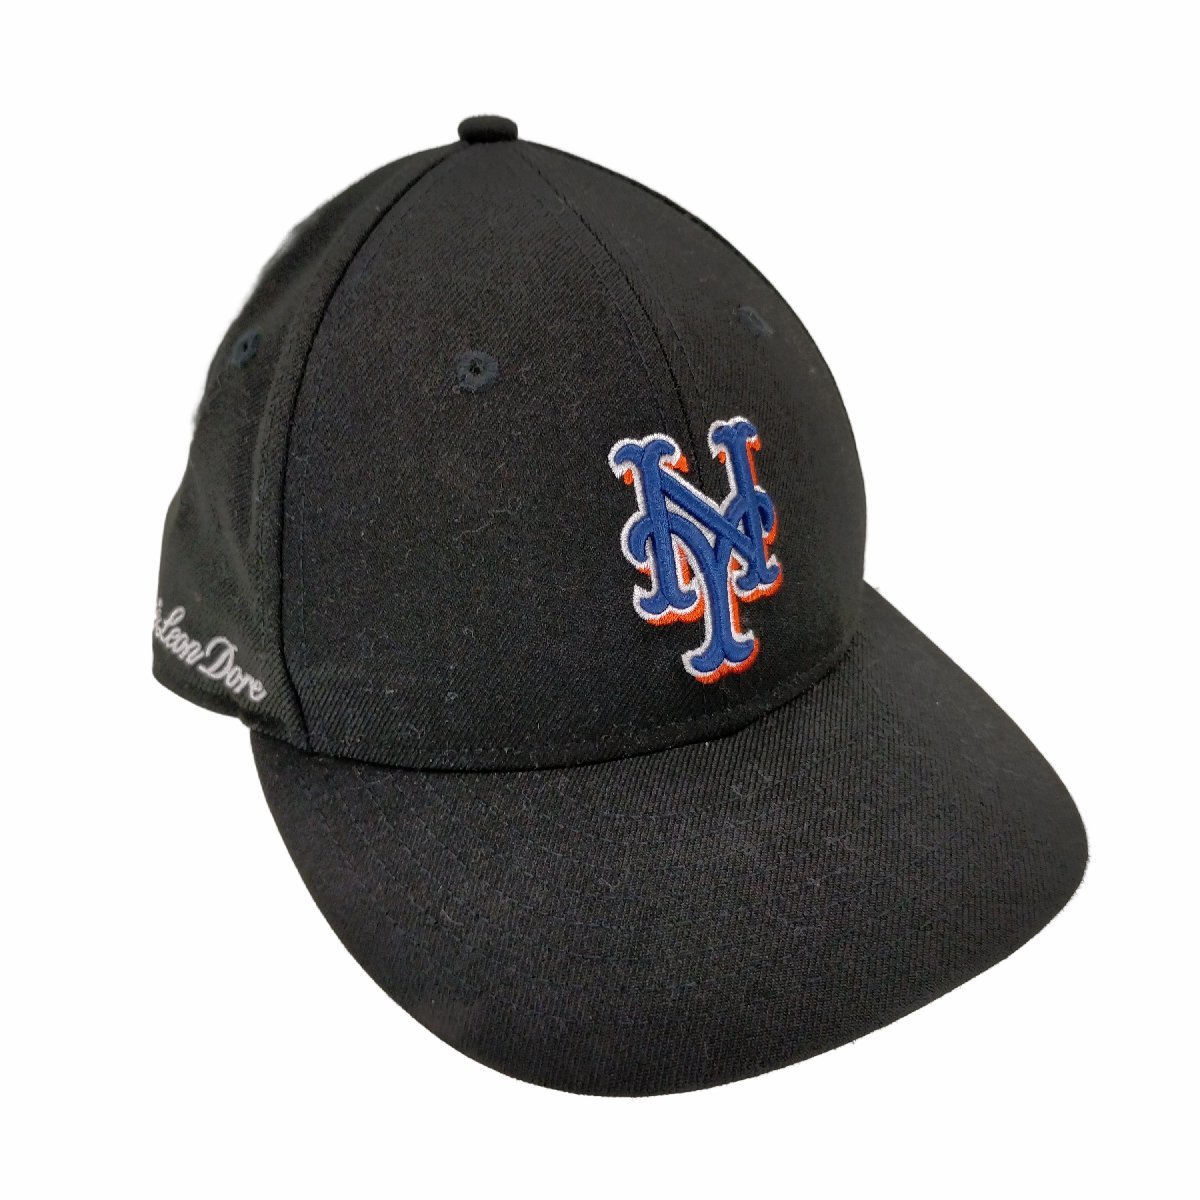 AIME LEON DORE(エイムレオンドレ) Mets Hat ベースボールキャップ メンズ 7 3 中古 古着 0530